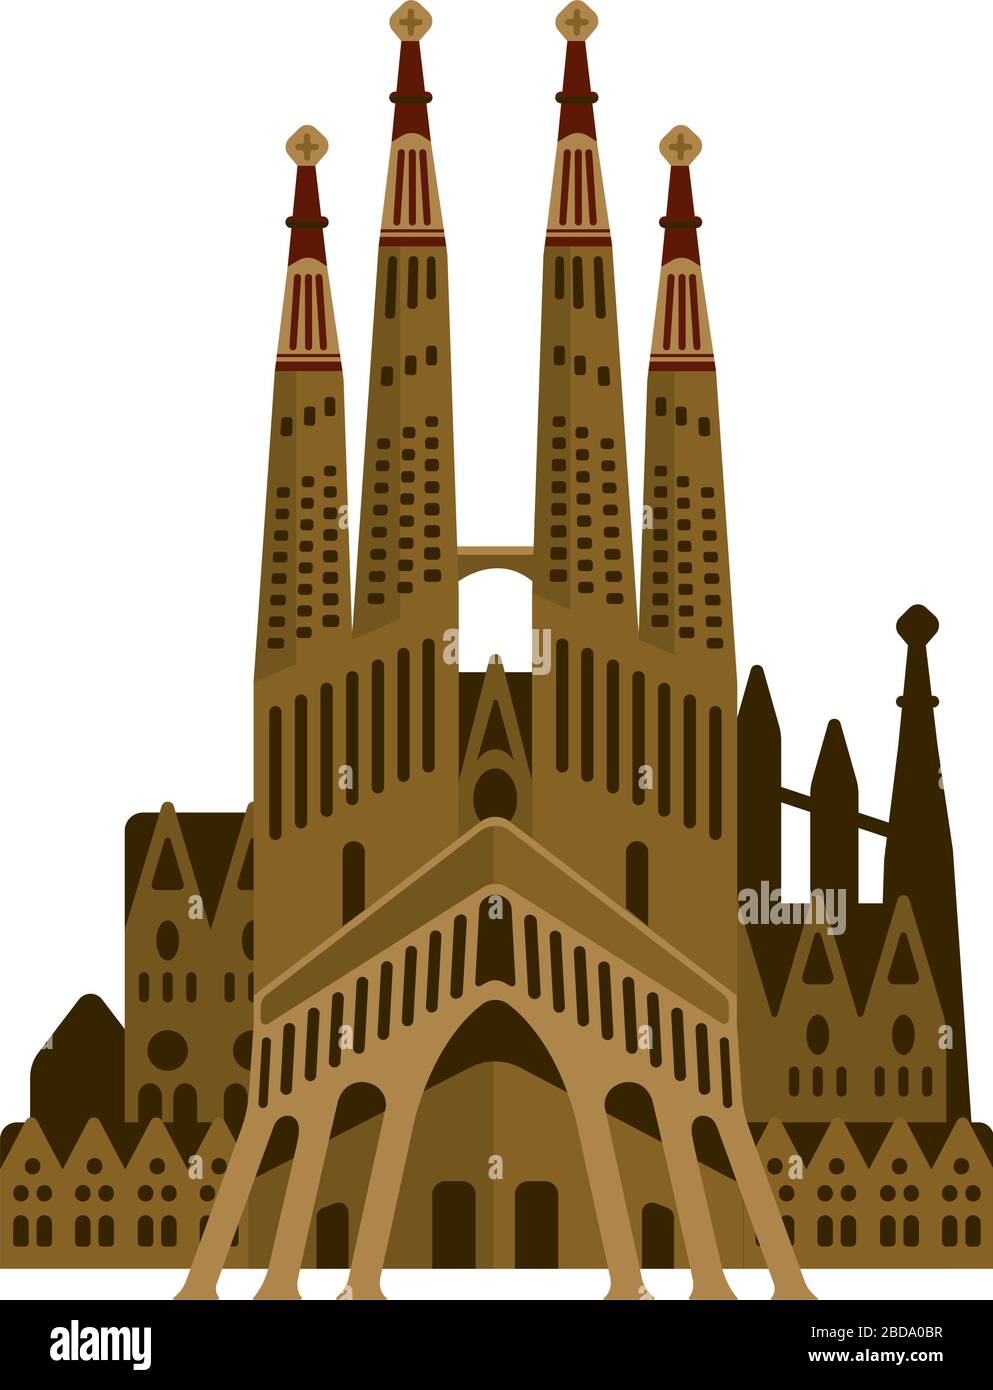 Sagrada Familia - Spanien / weltberühmte Bauten Vektorgrafiken. Stock Vektor